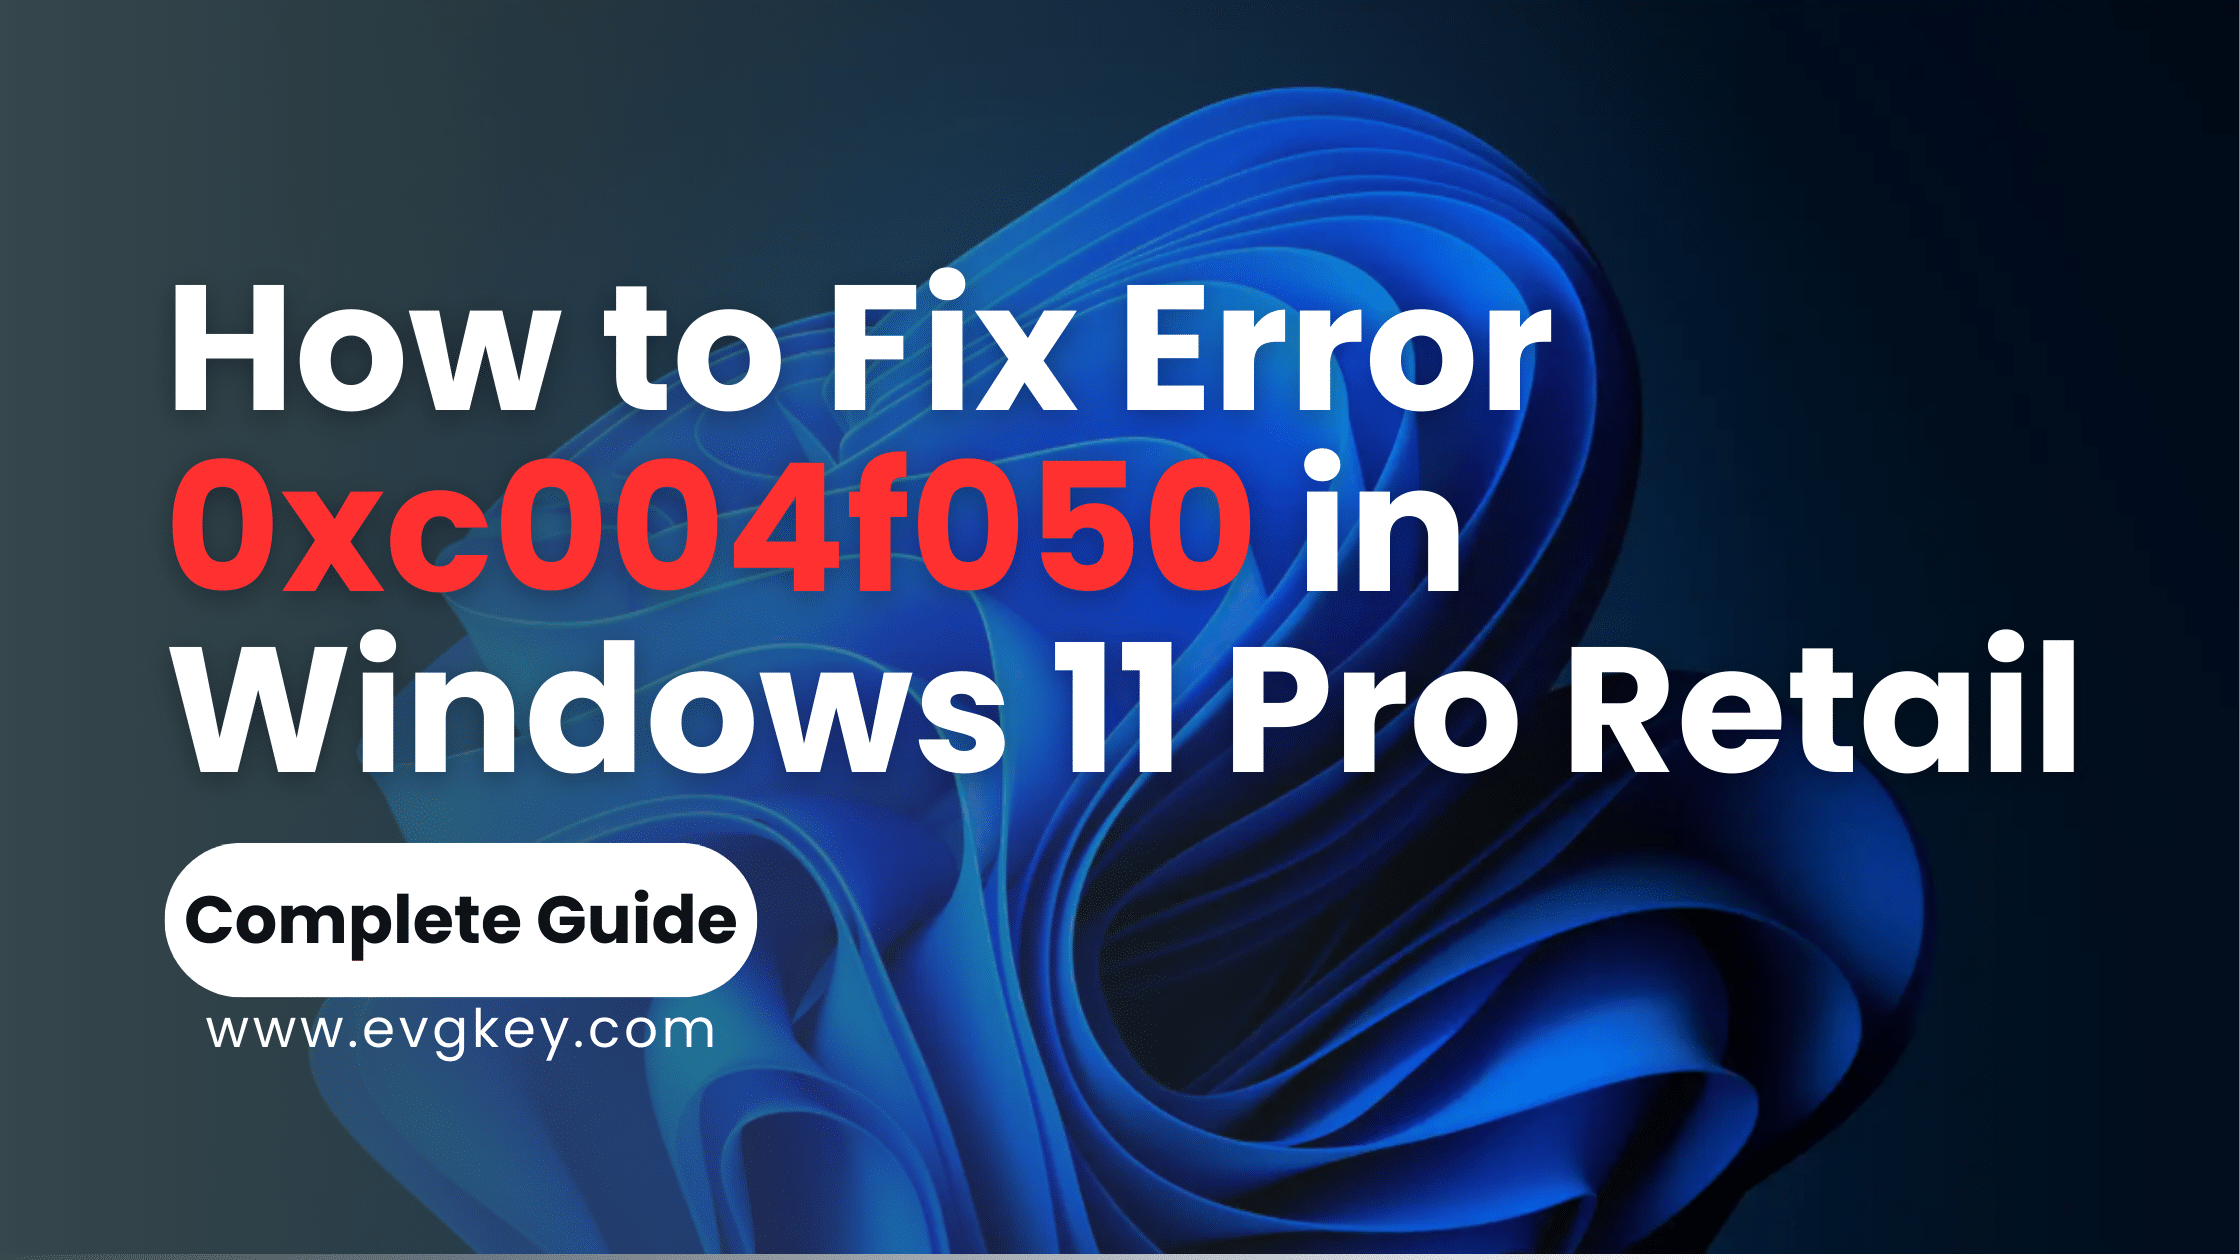 How to Fix Error 0xc004f050 in Windows 11 Pro Retail